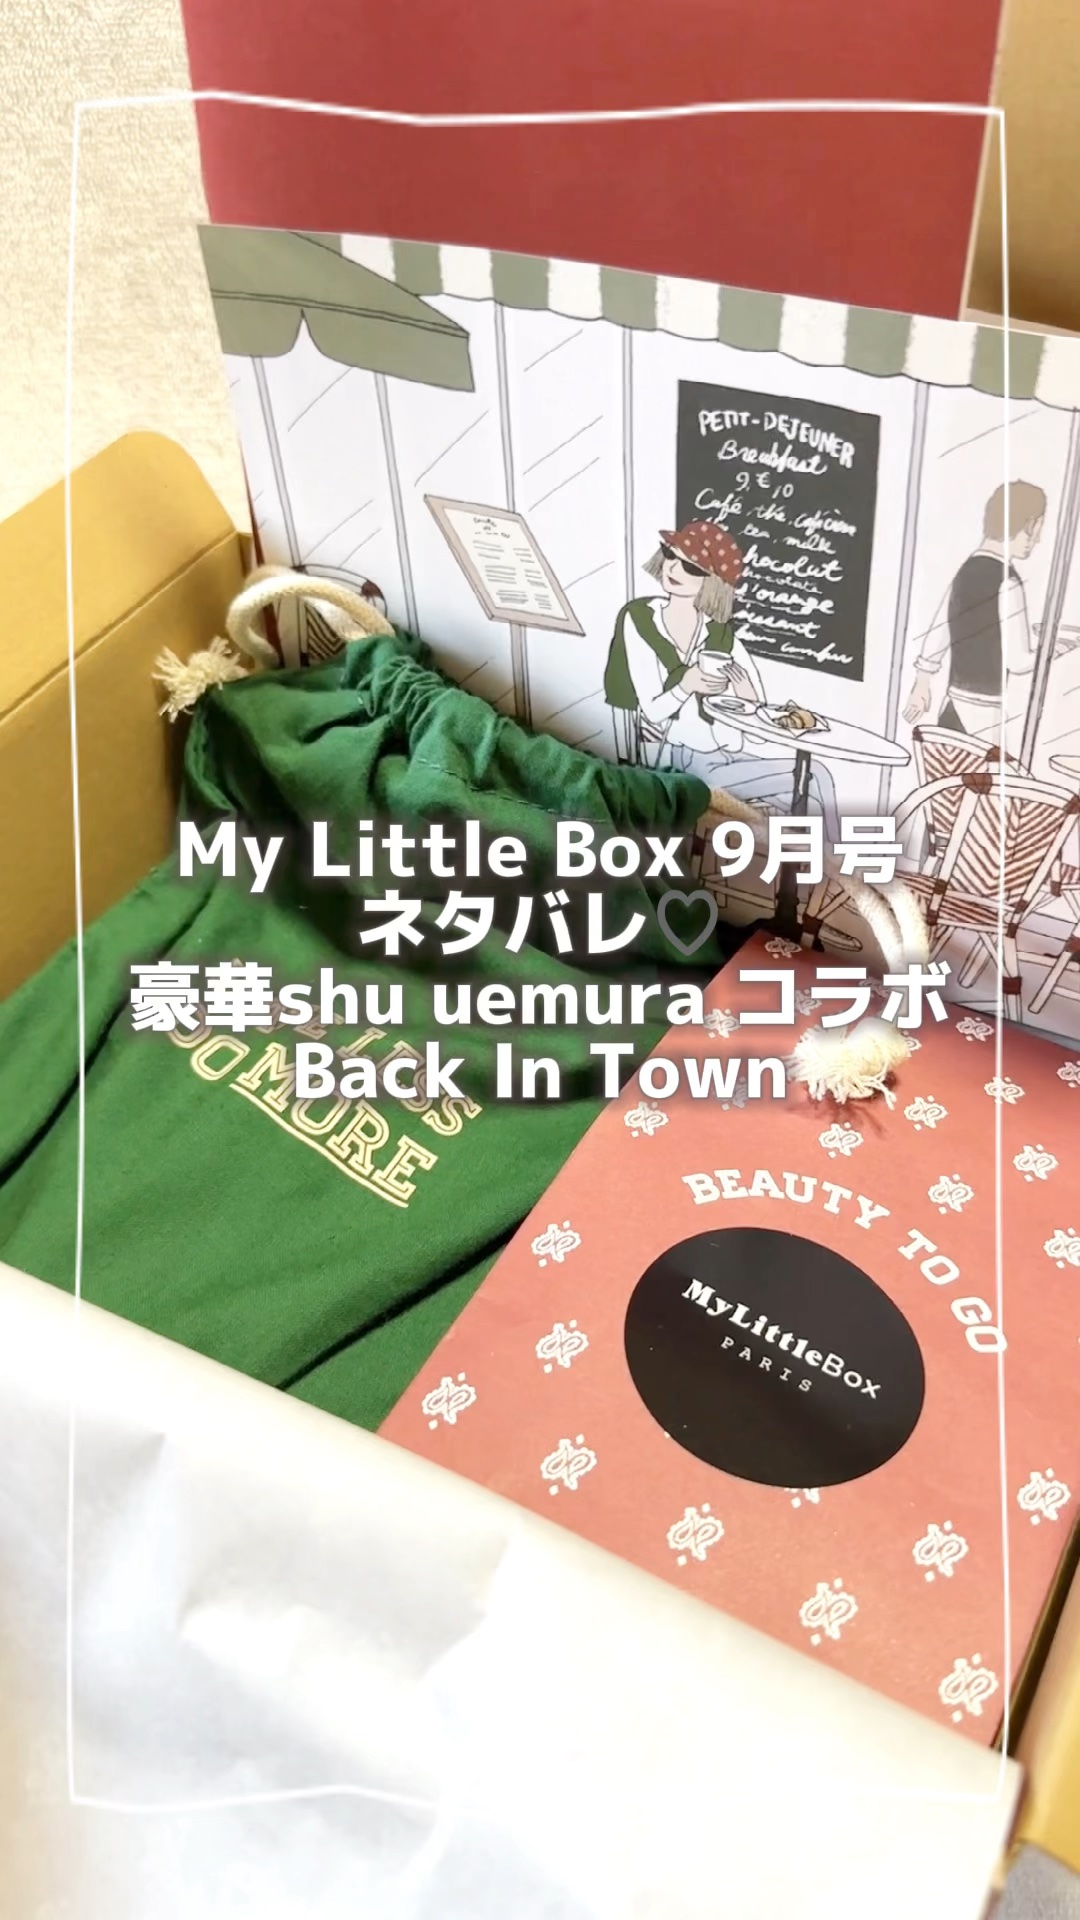 My Little Box｜My Little Boxの口コミ My Little Box 9月号ネタバレ♡ by  ☆ふくすけ☆(混合肌/30代前半) LIPS